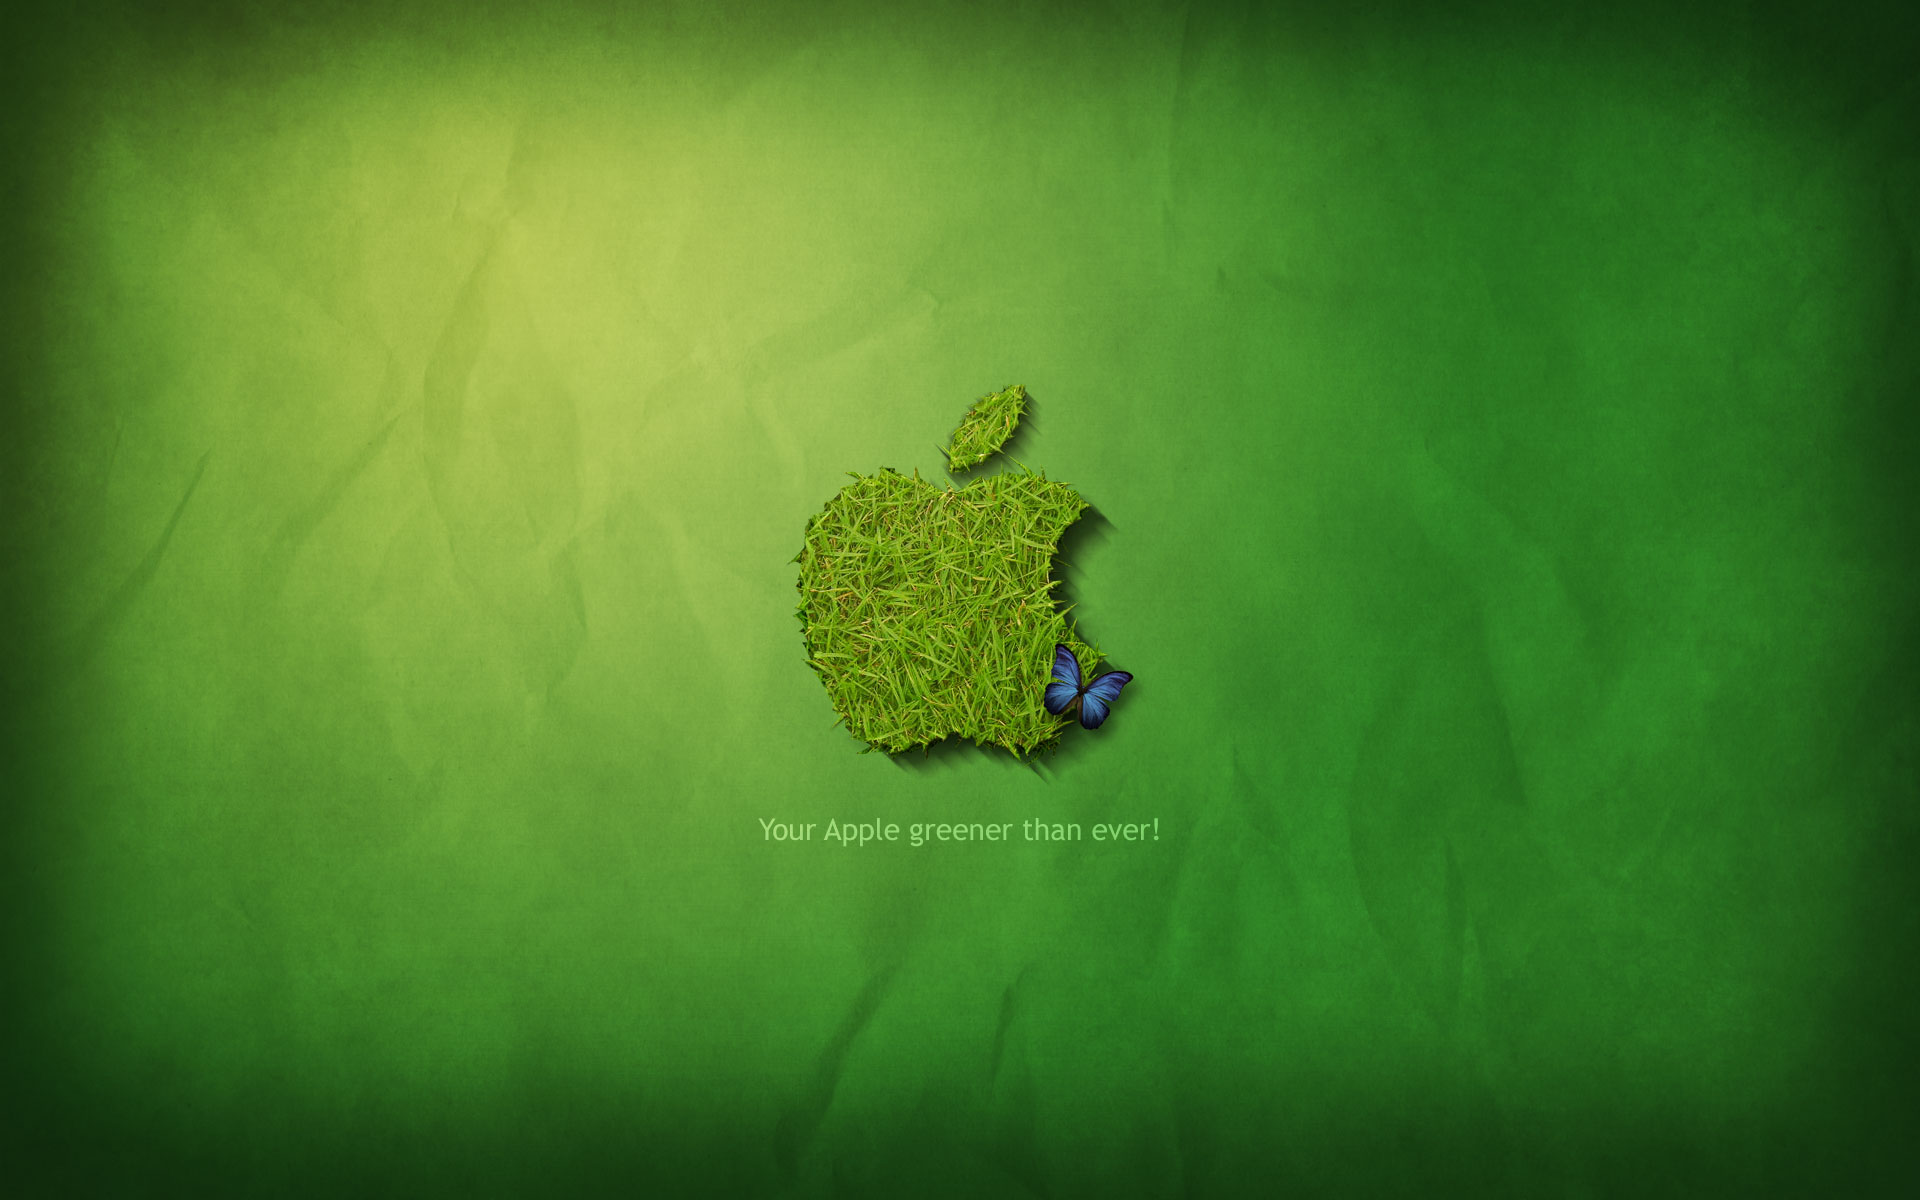 Apple Inc., Mac, technology, logos - desktop wallpaper